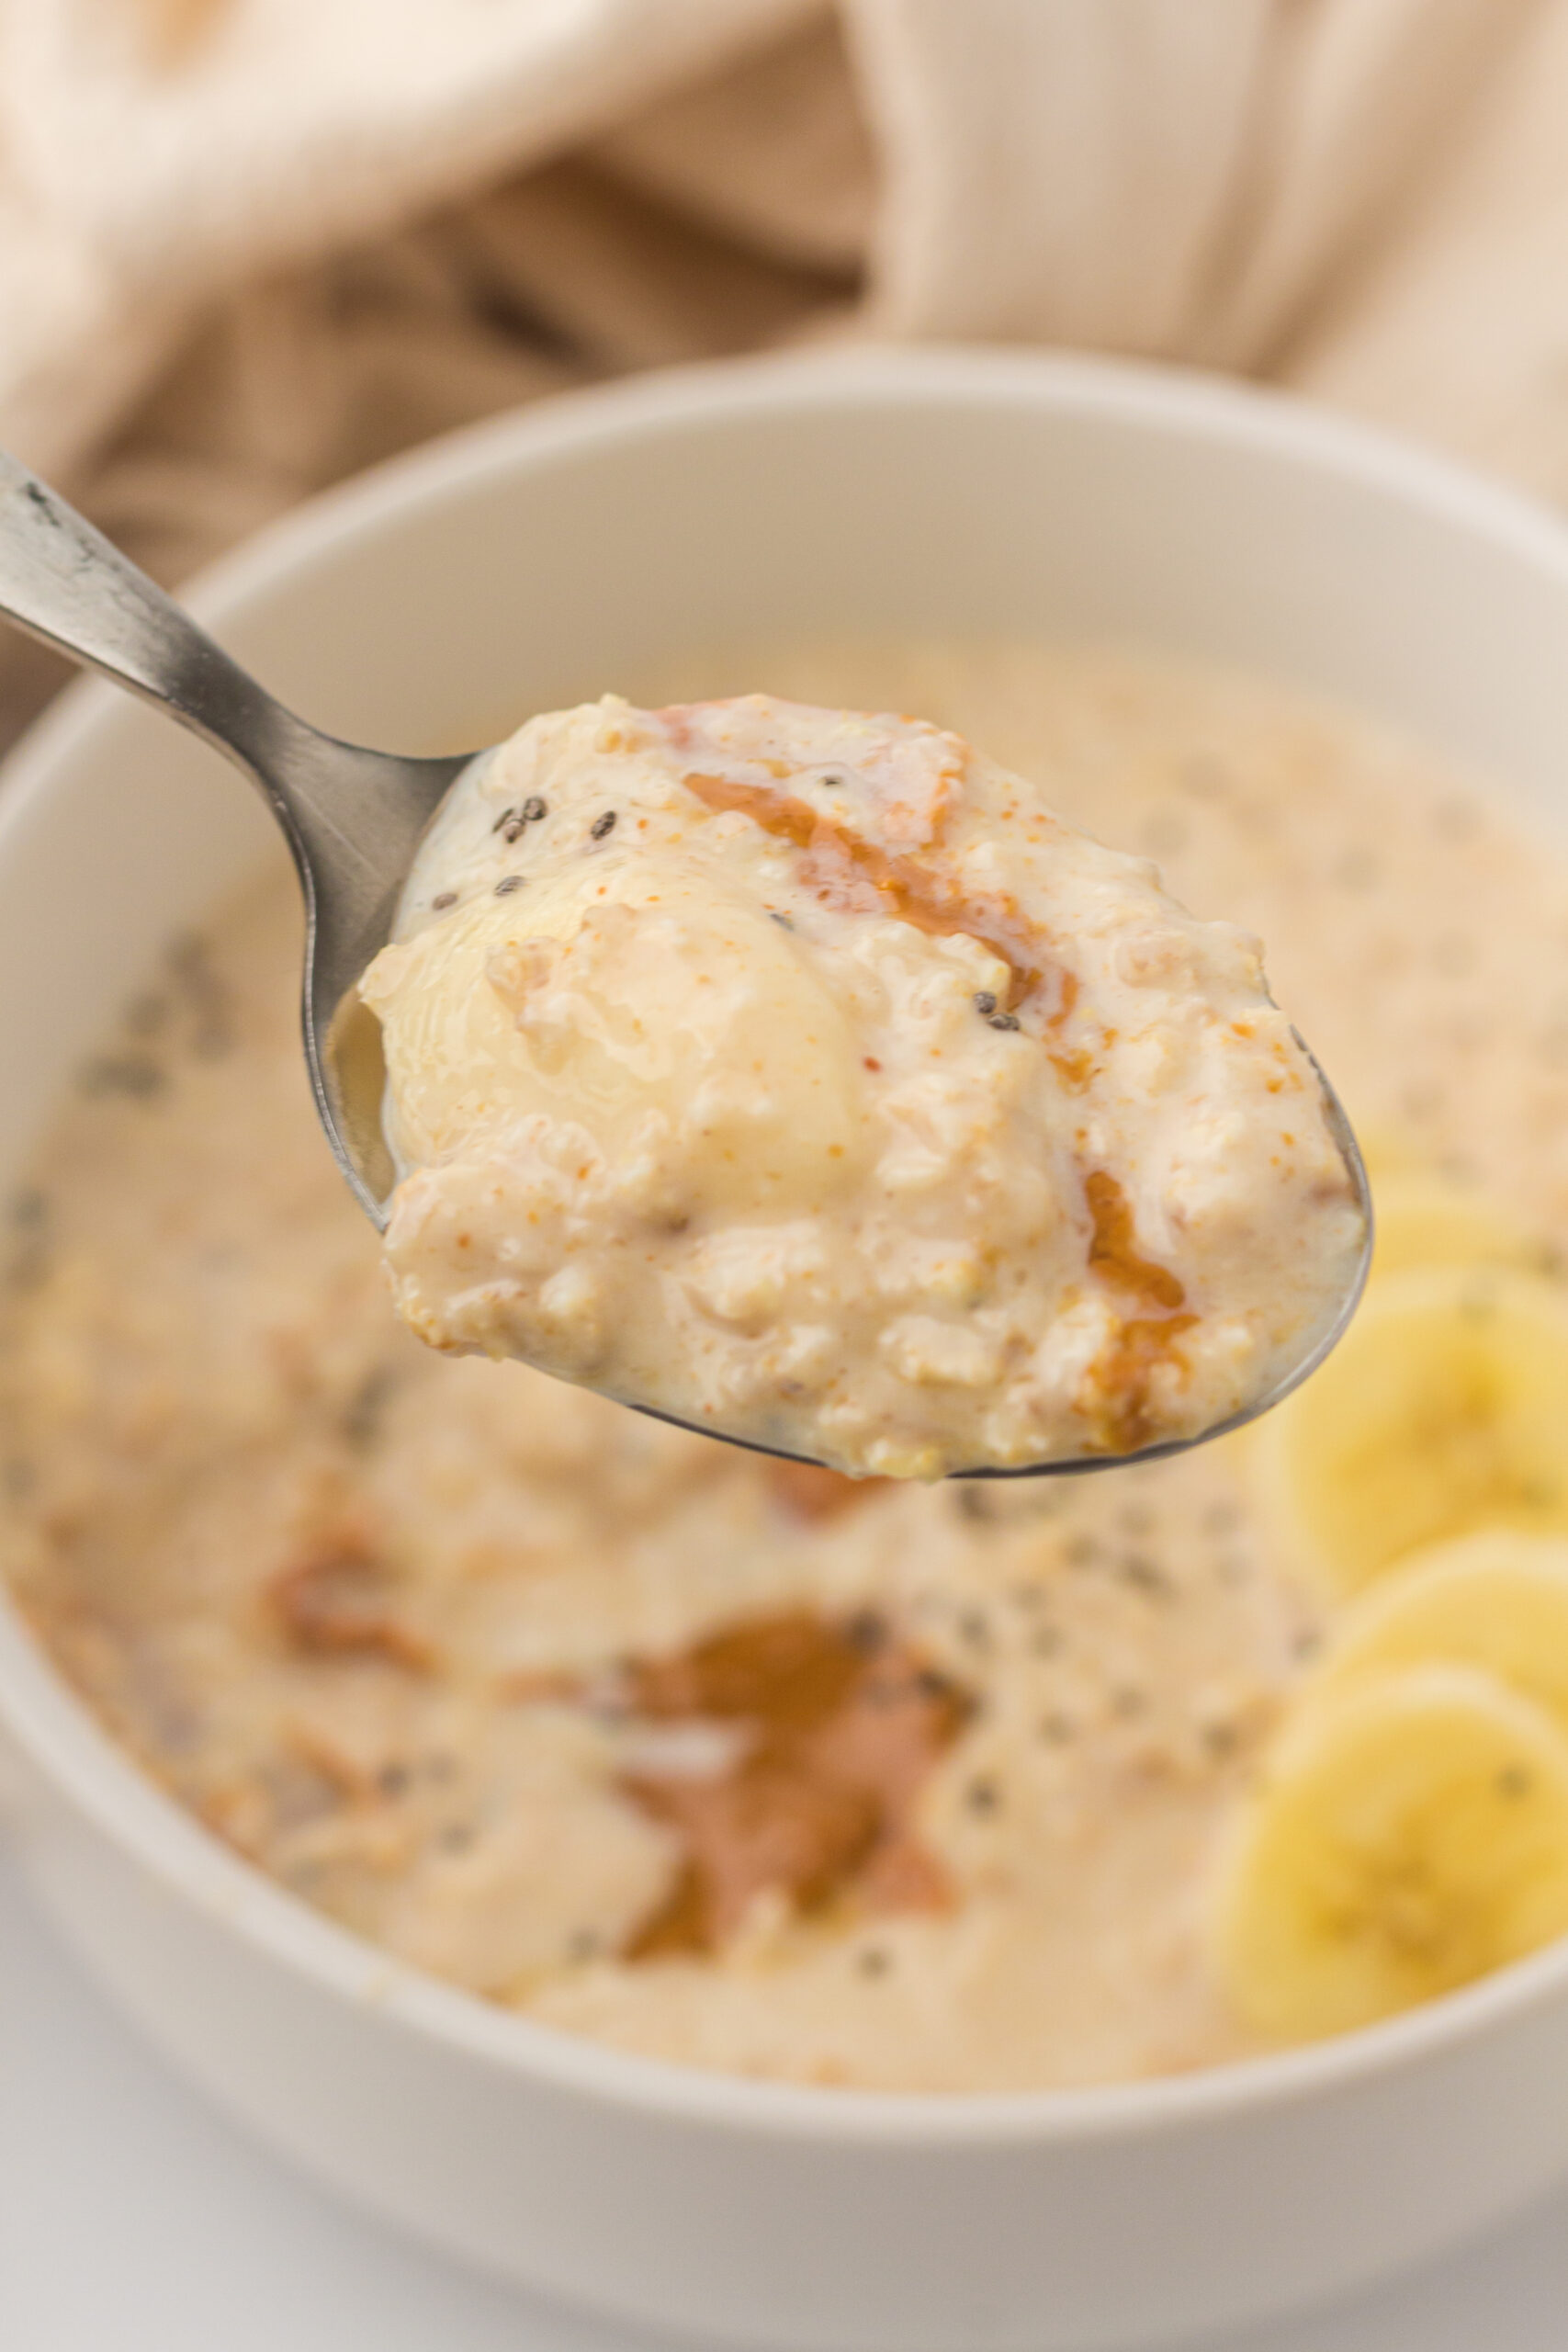 Creamy Stovetop Peanut Butter and Banana Porridge